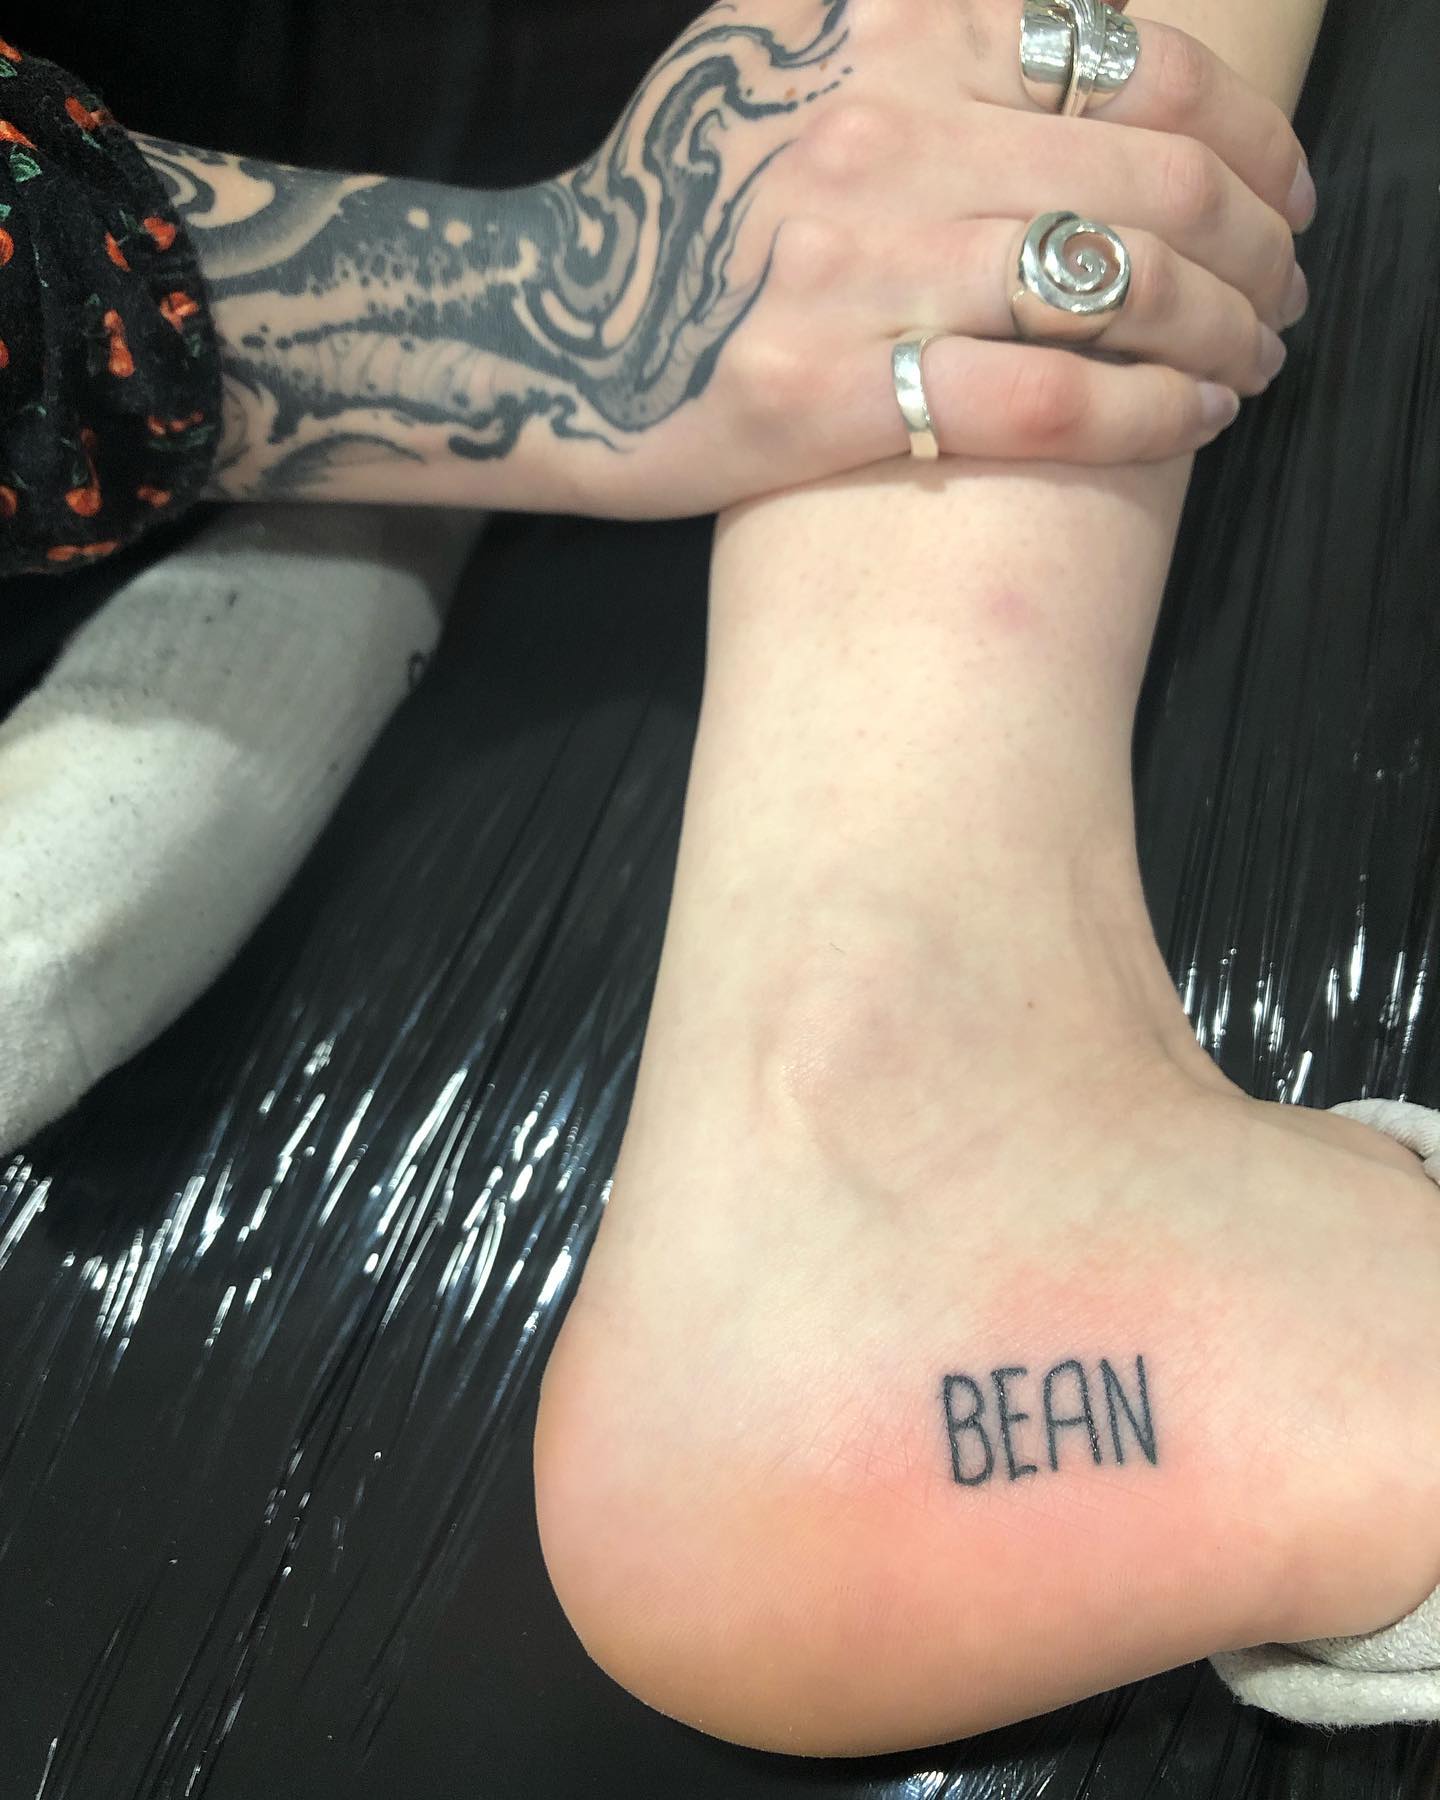 Divertido poroto tatuaje de una palabra